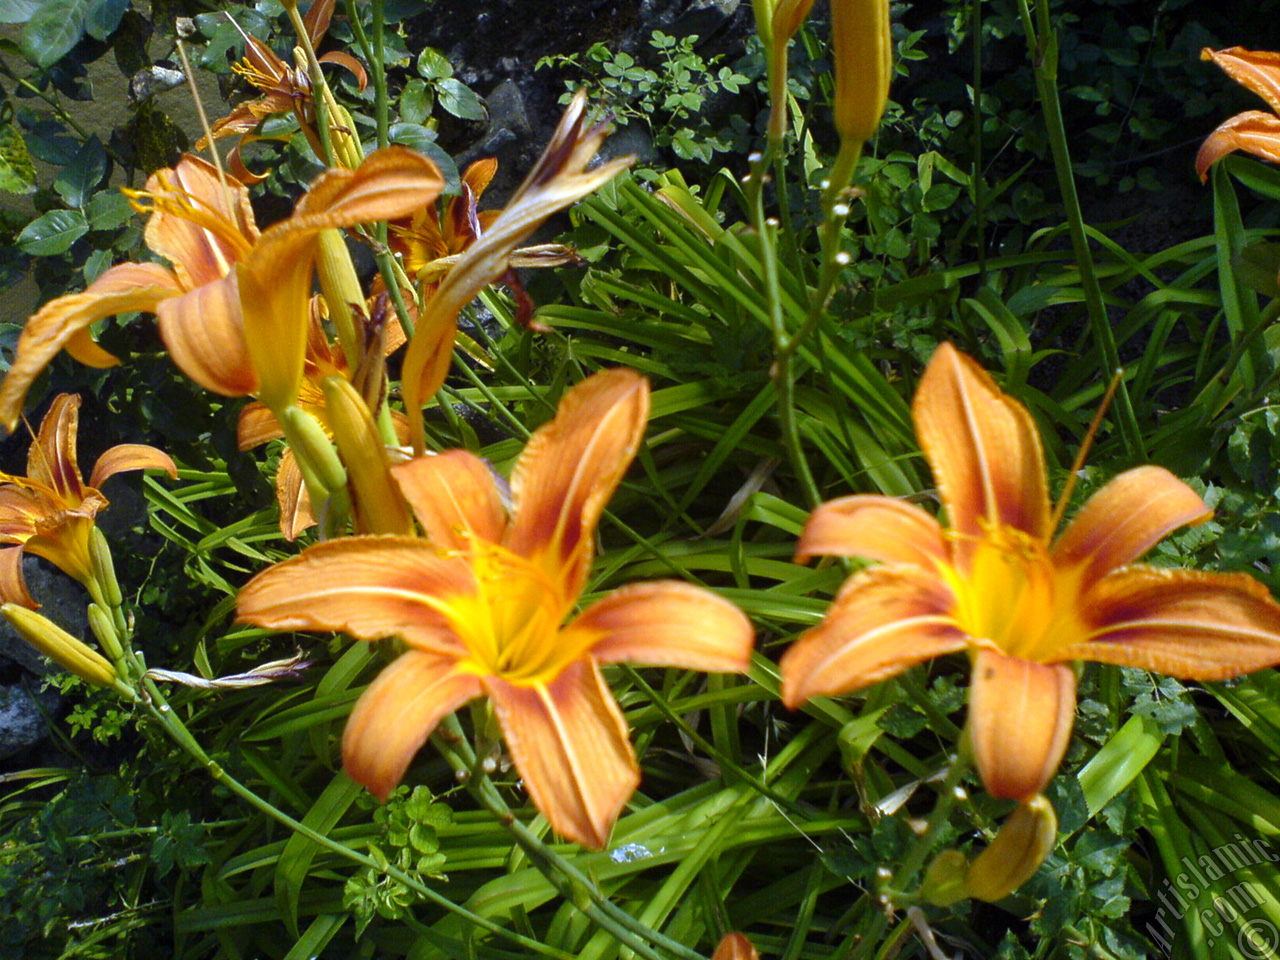 Orange color daylily -tiger lily- flower.
